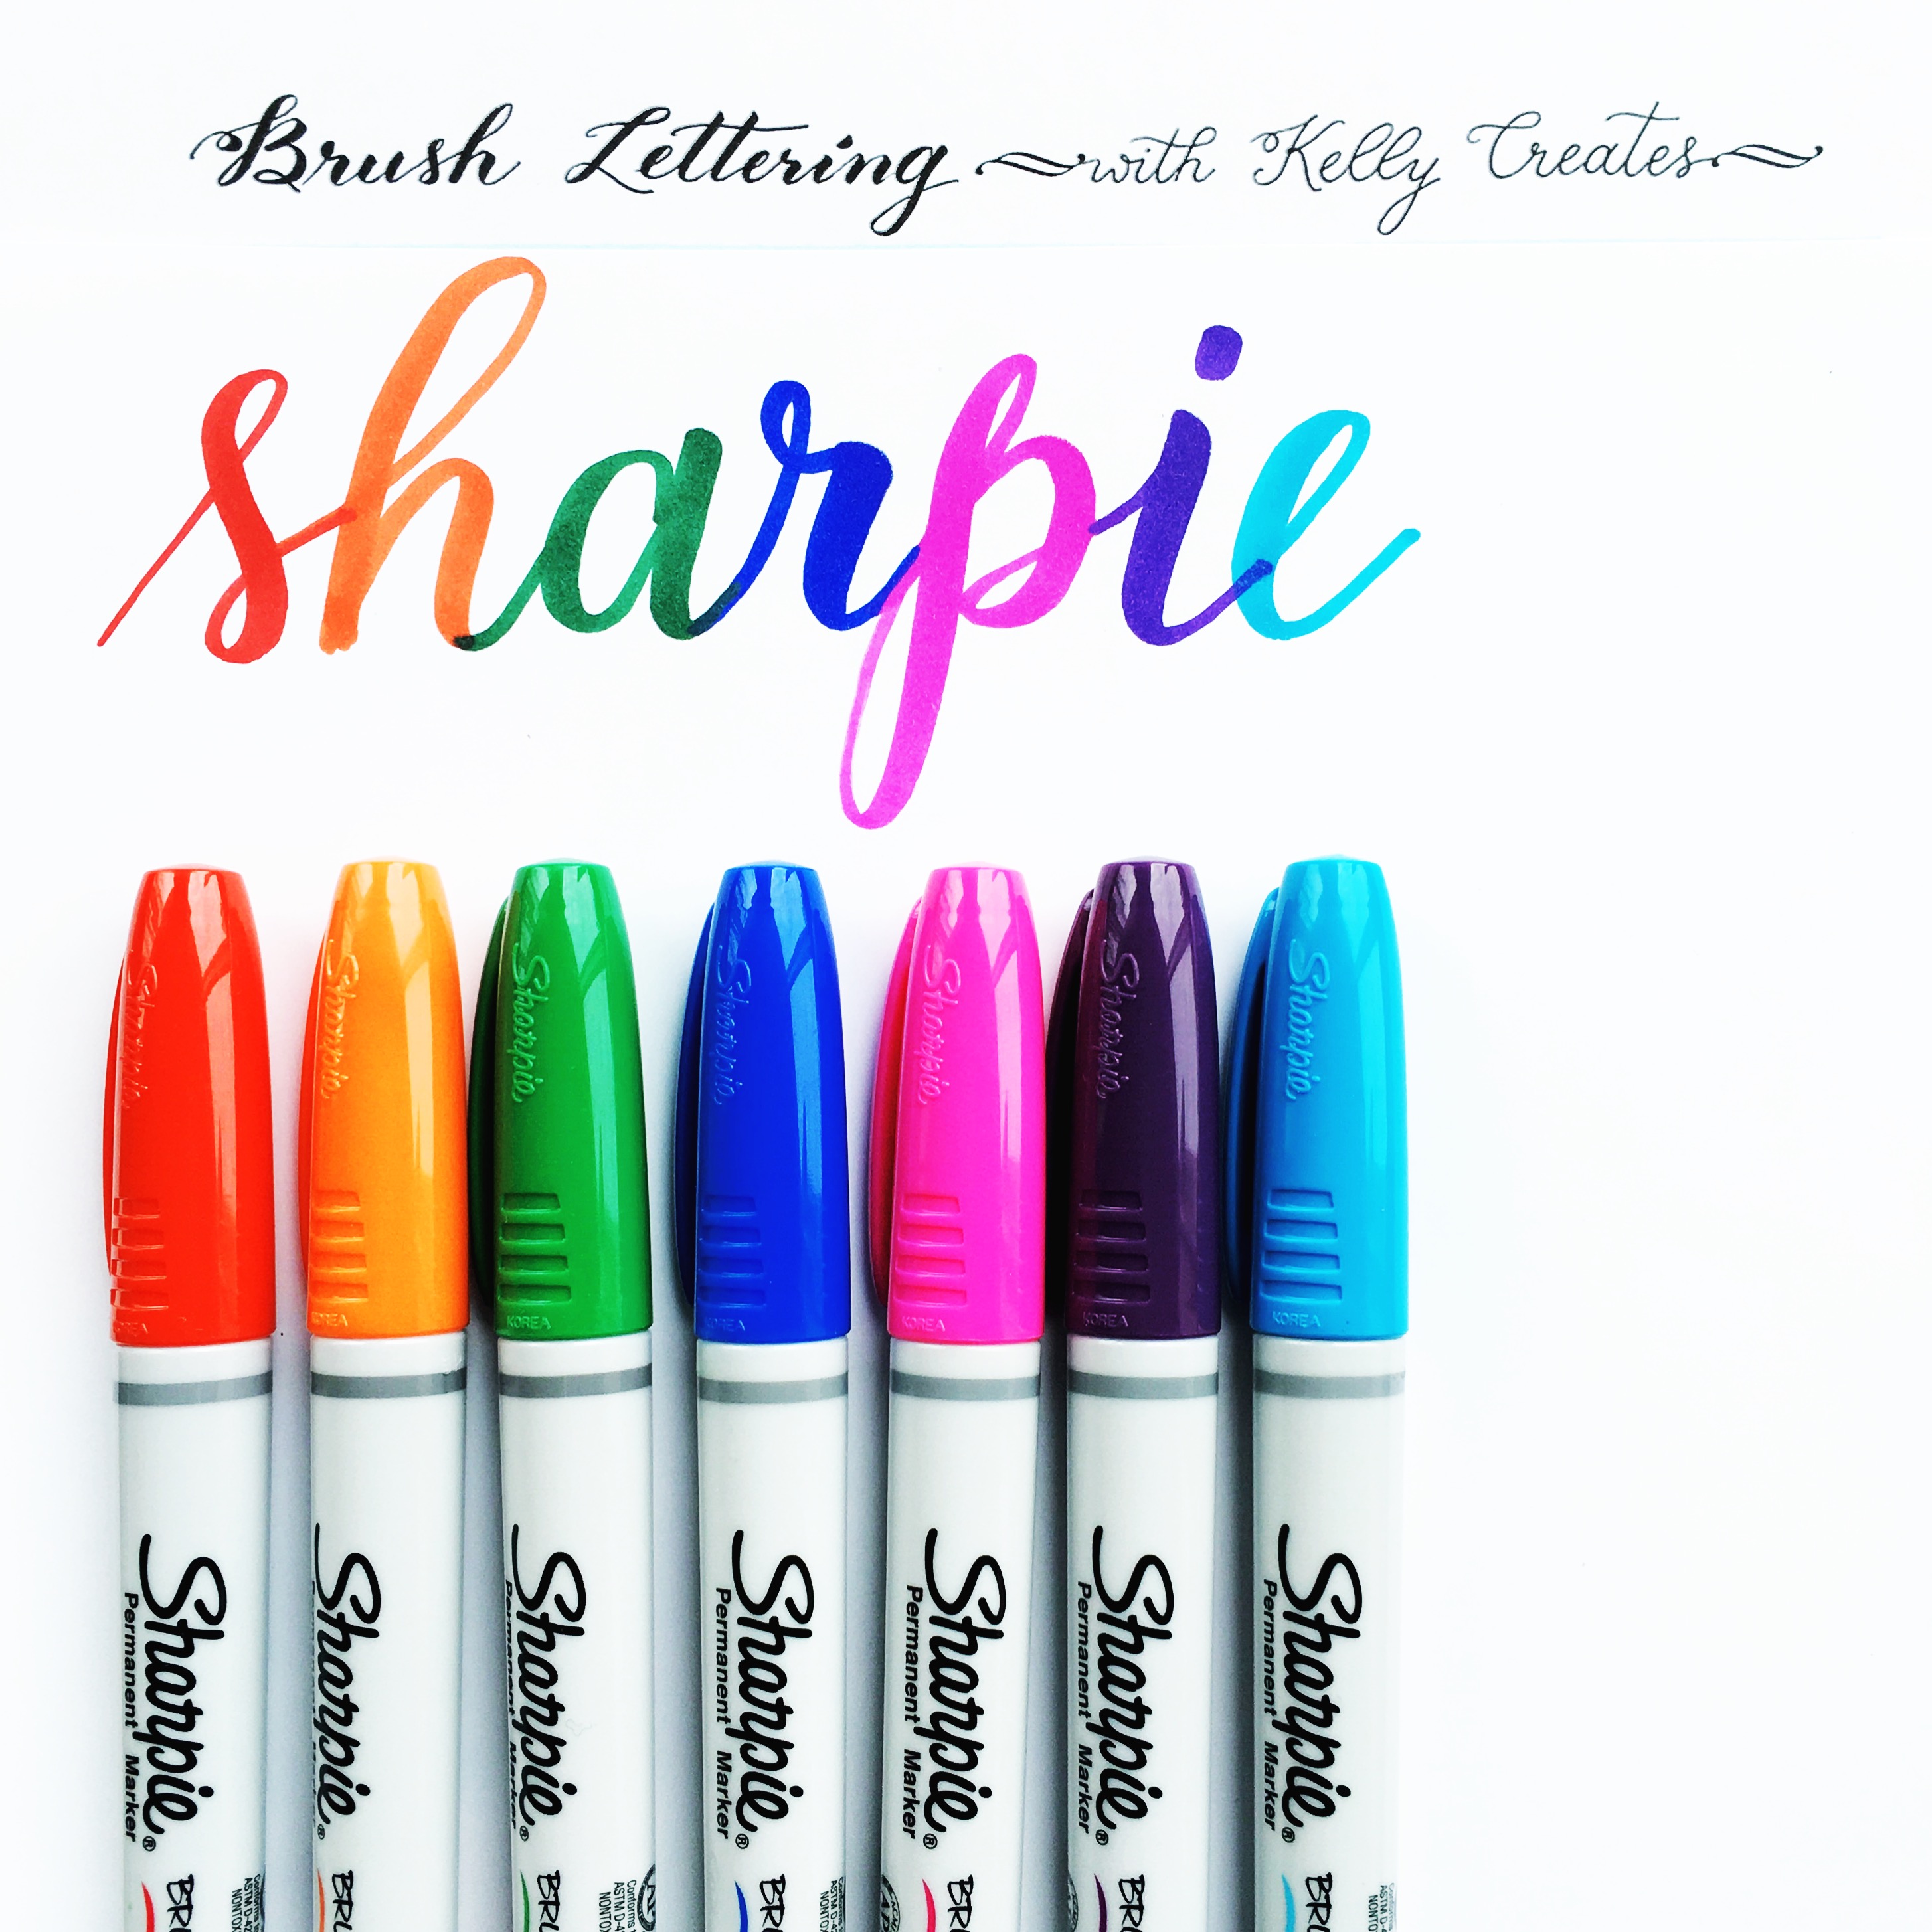 Review of the Sharpie Brush Tip Permanent Marker #Sharpie #JetPens  #Zentangle